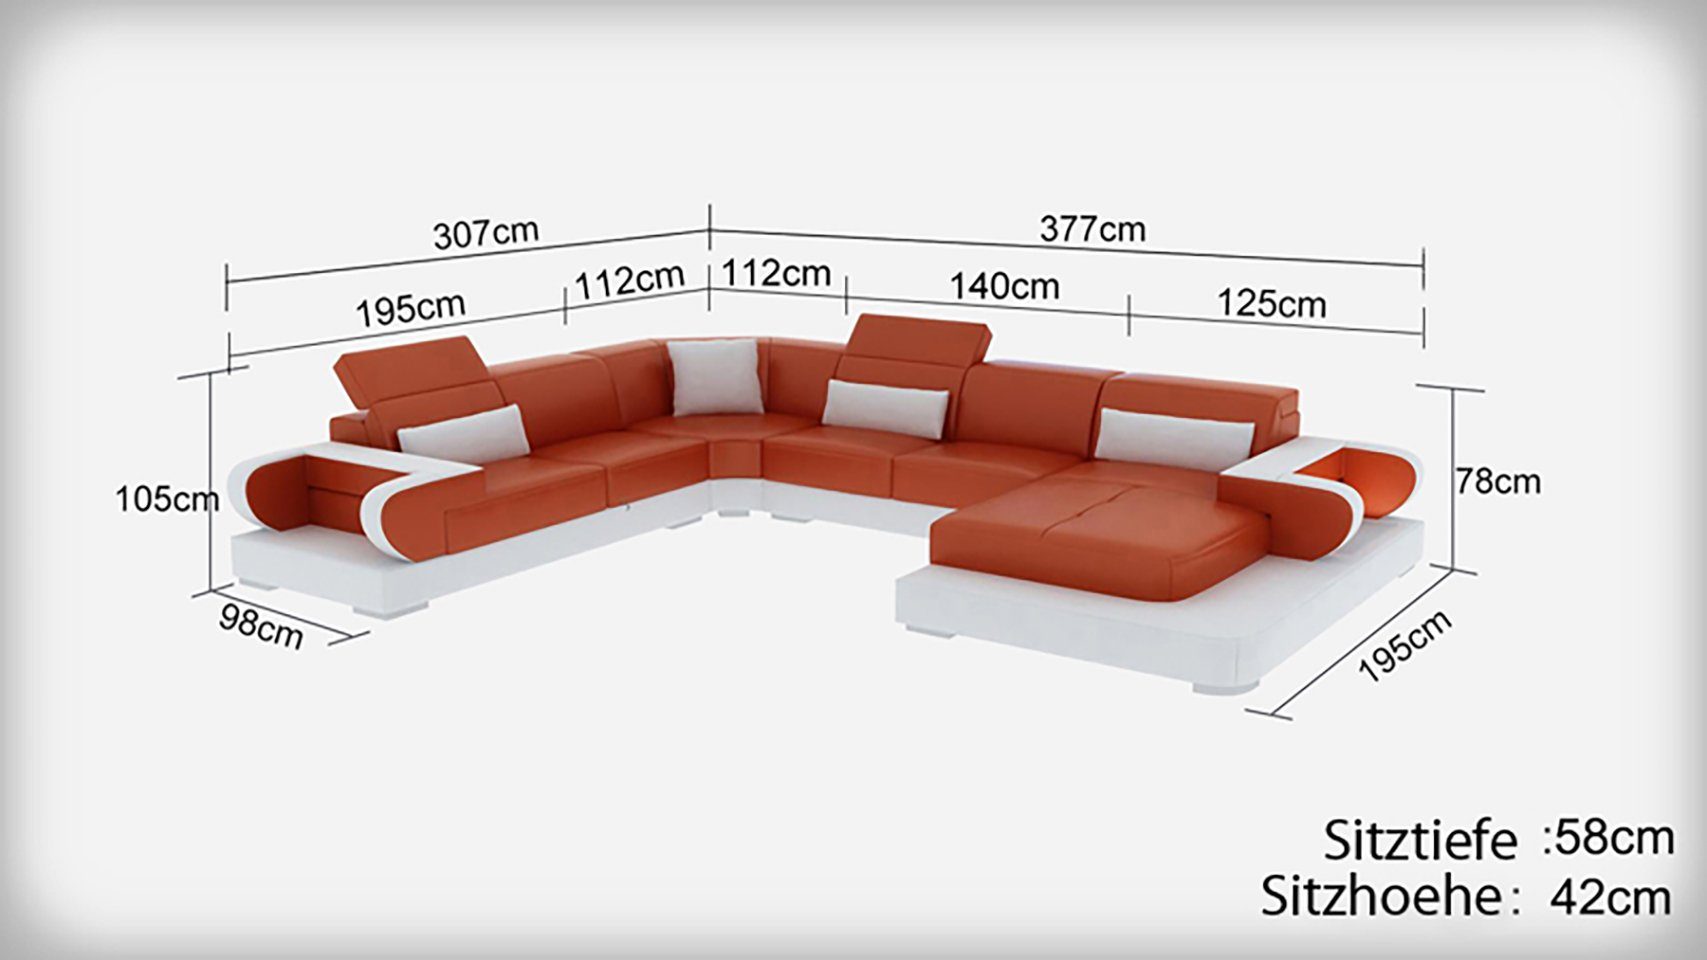 Sofa UForm Ecksofa Wohnlandschaft JVmoebel Design Ecksofa +Tisch Leder Couch Modern